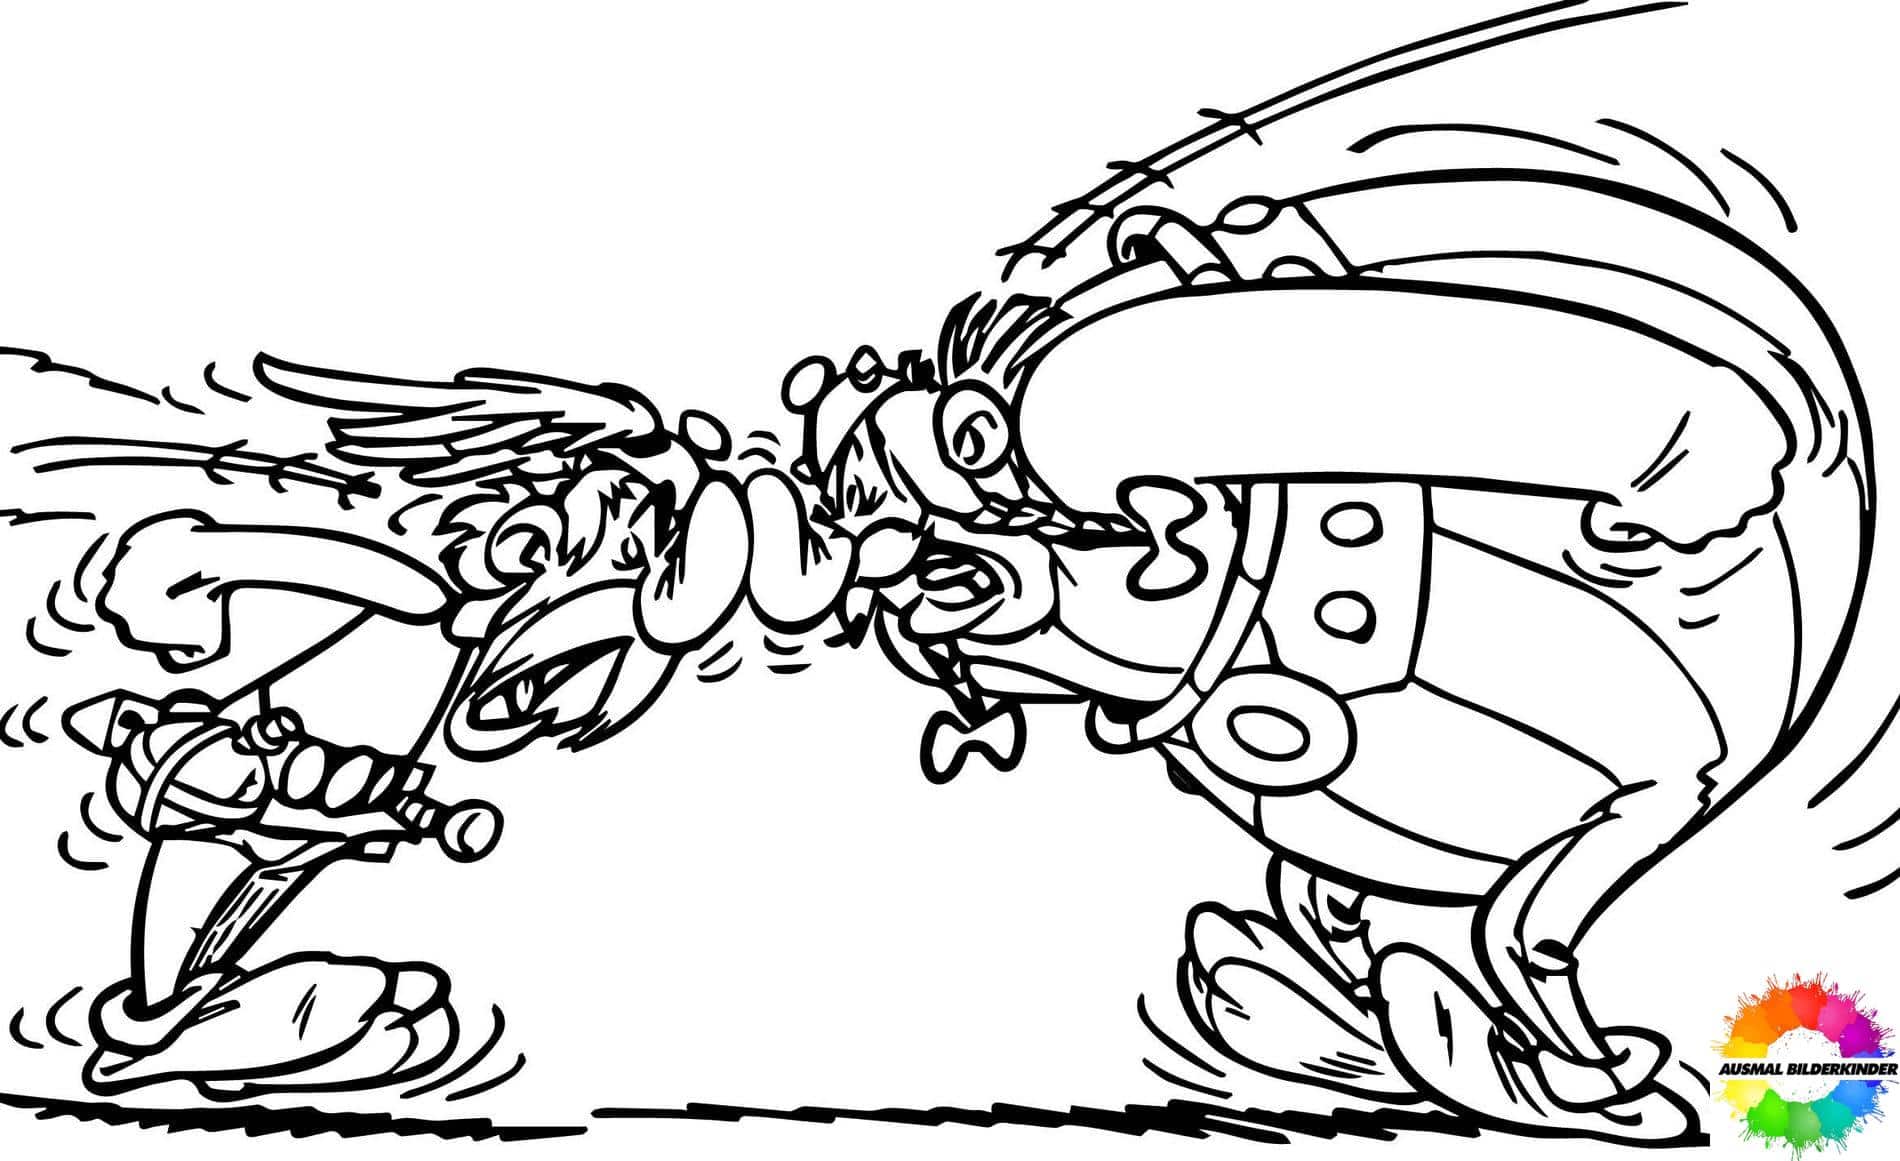 Asterix-and-Obelix-Ausmalbilder-ausmalbilderkinder-de-19